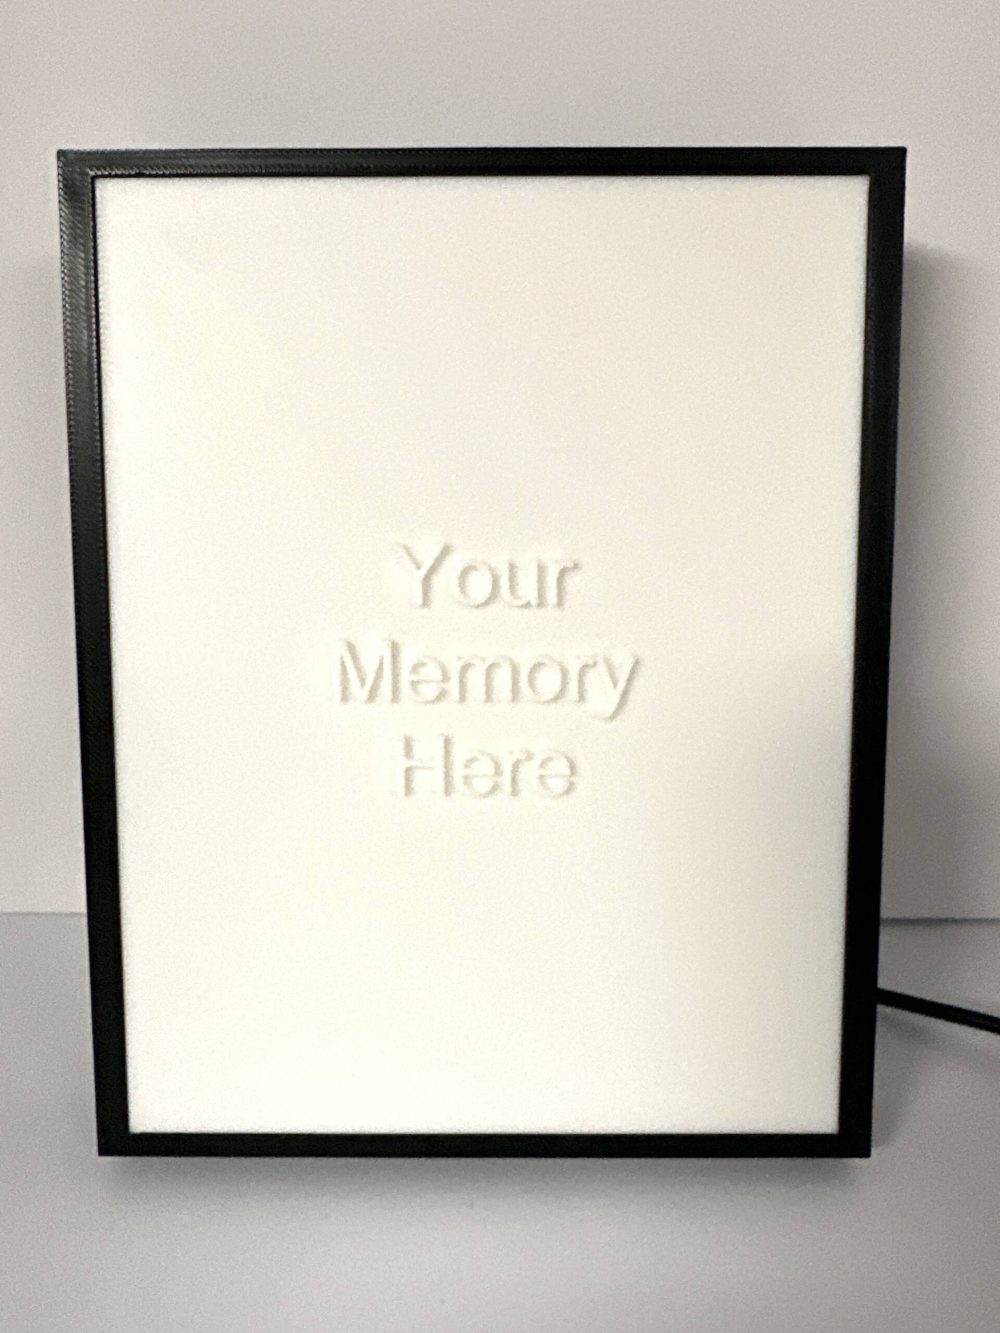 Rectangular lithophane frame with placeholder text "Your Memory Here" for custom Santa decoration.